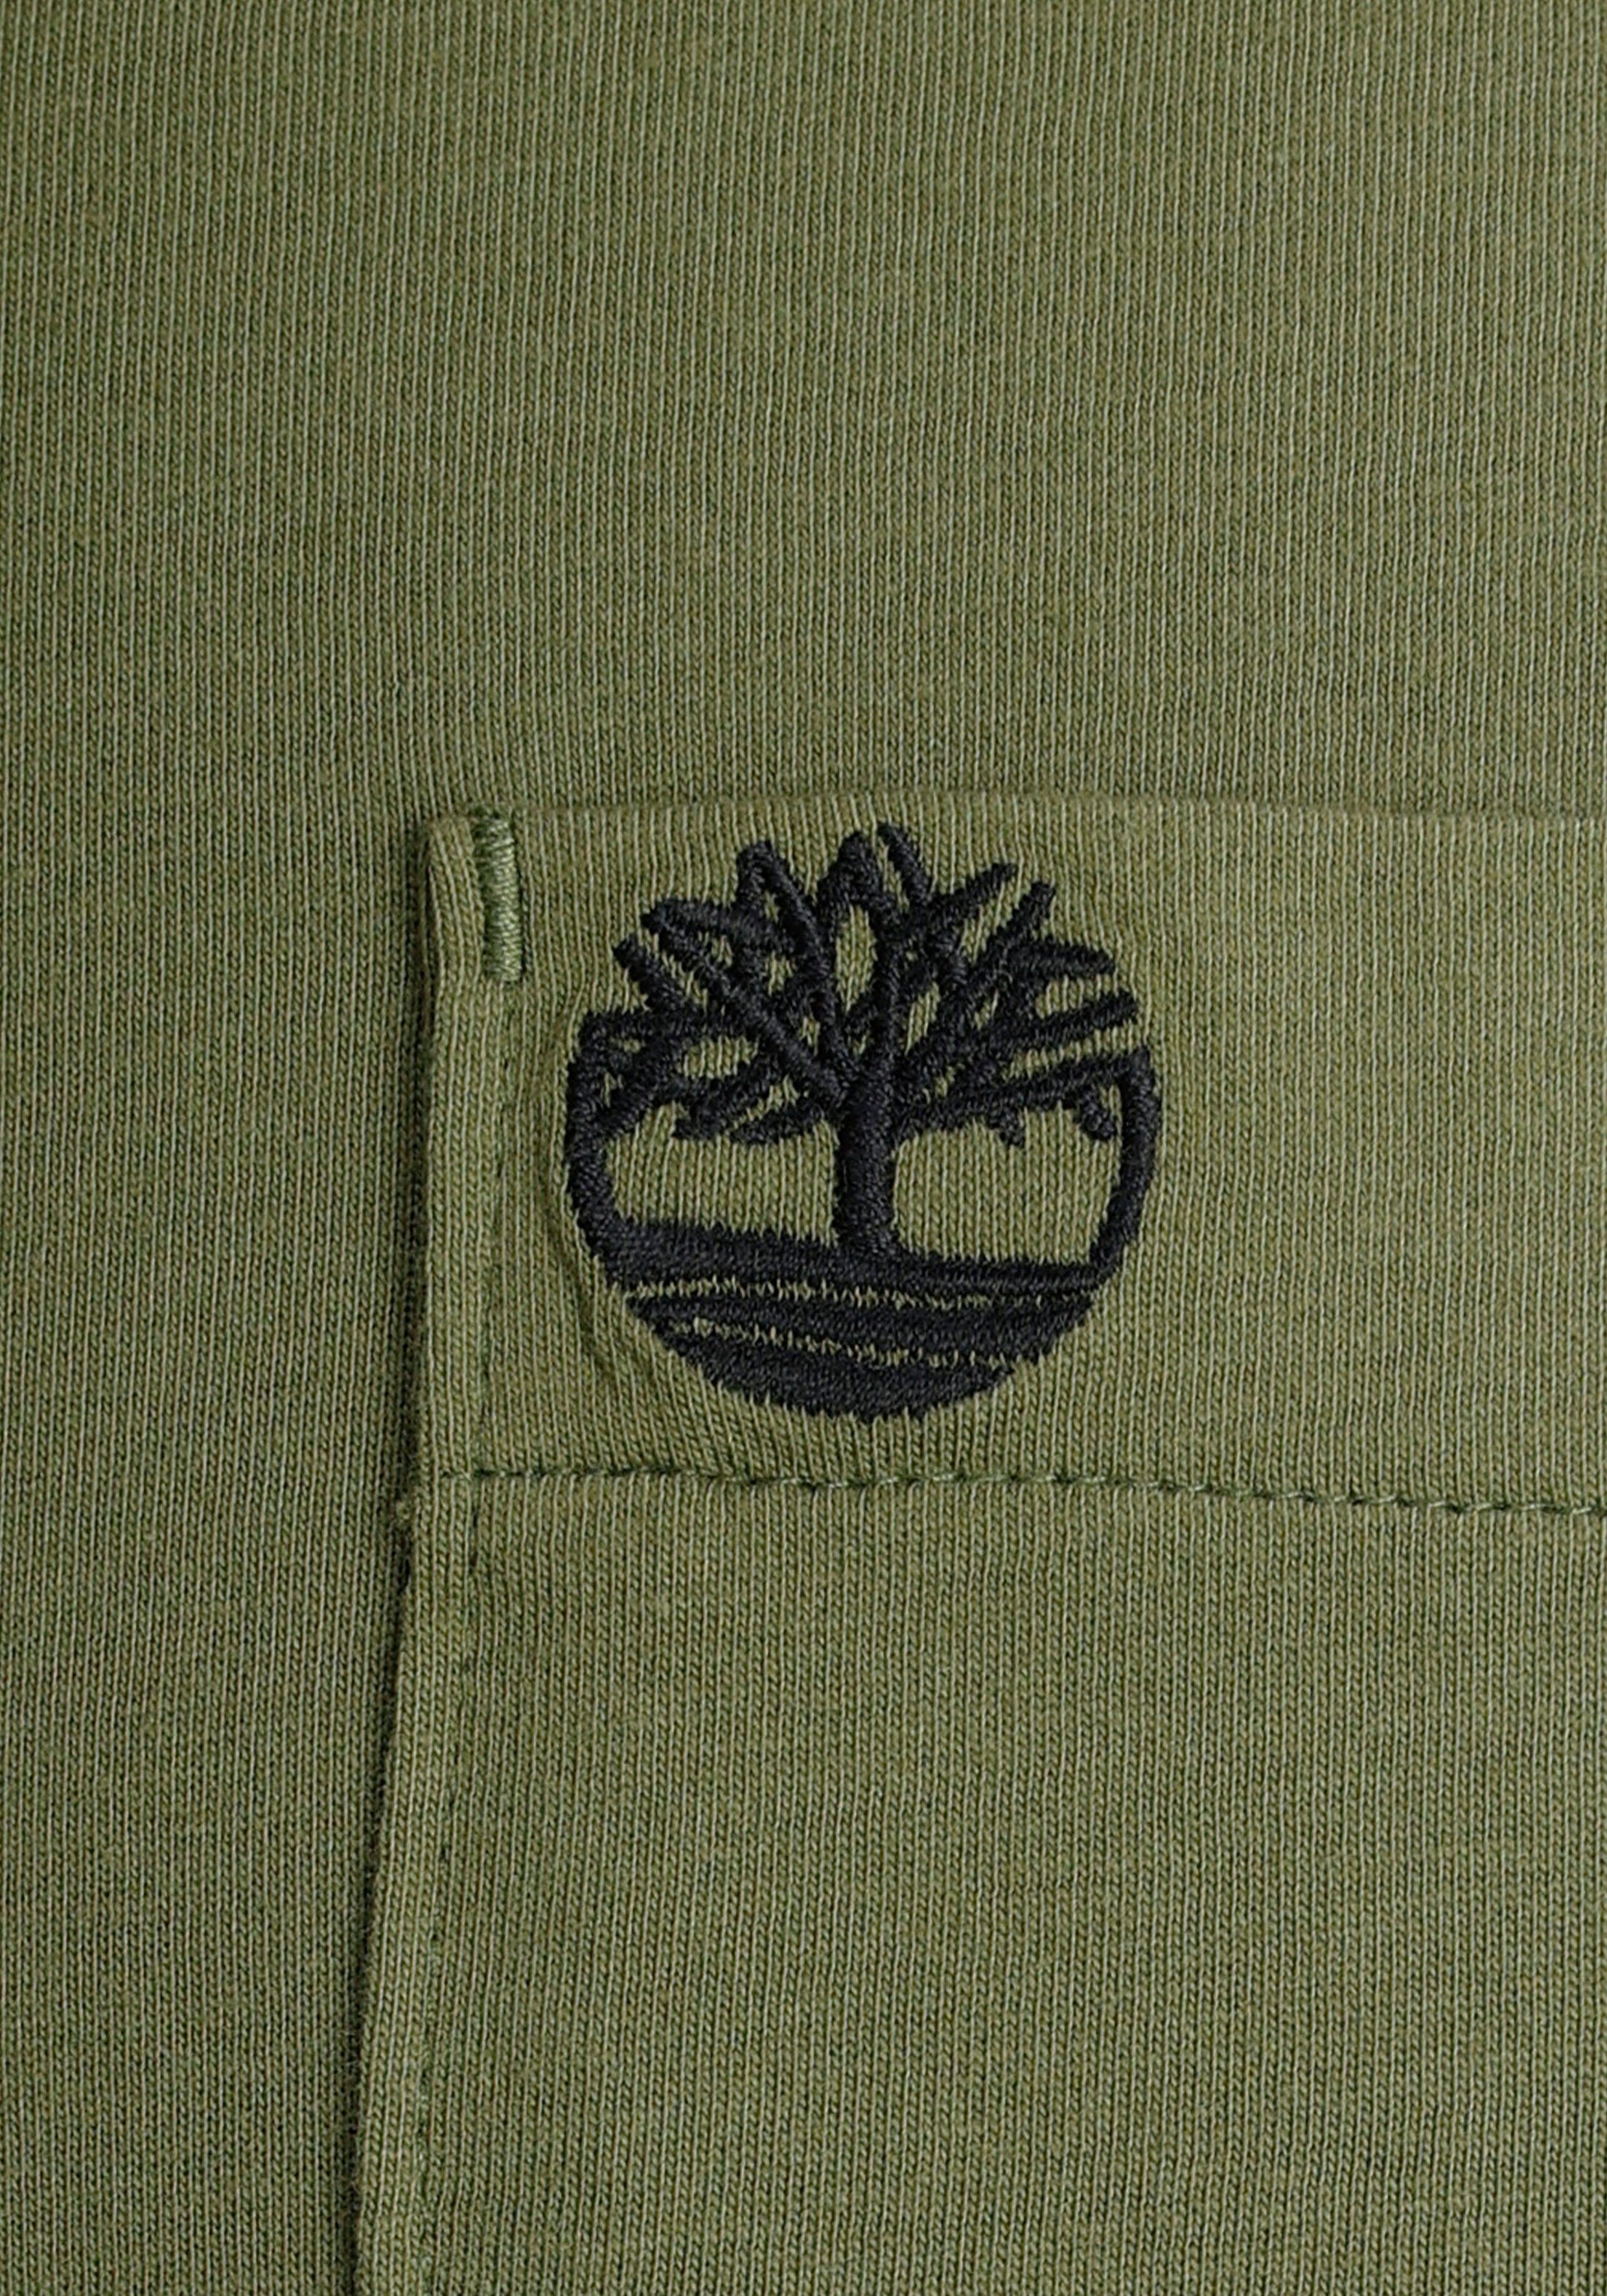 Timberland T-Shirt DUNSTAN RIVER POCKET mayfly TEE